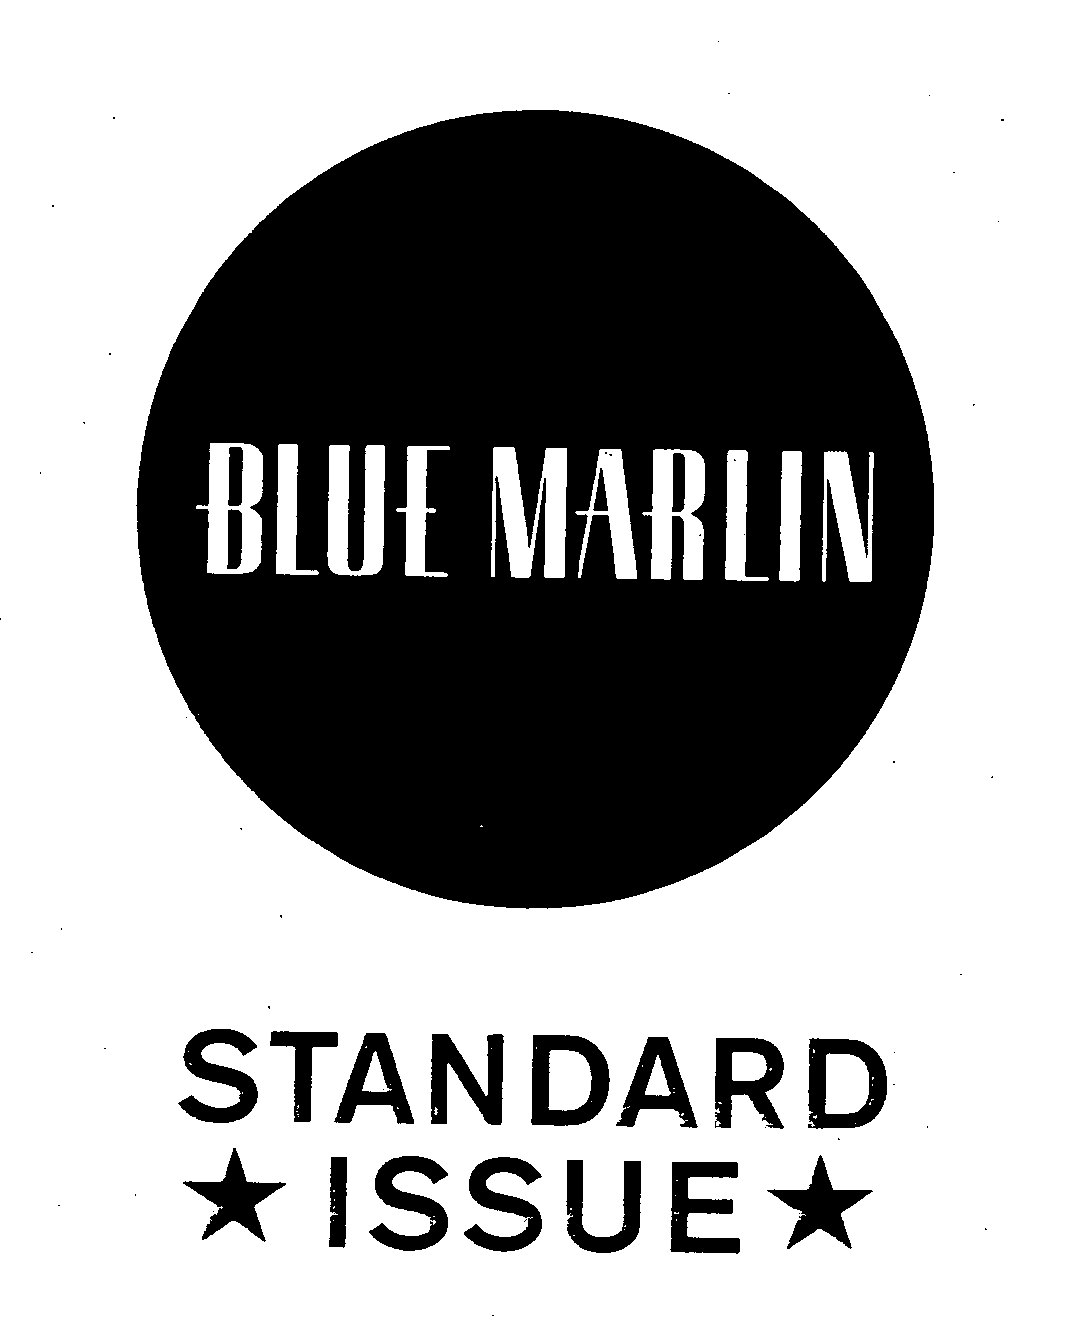  BLUE MARLIN STANDARD ISSUE